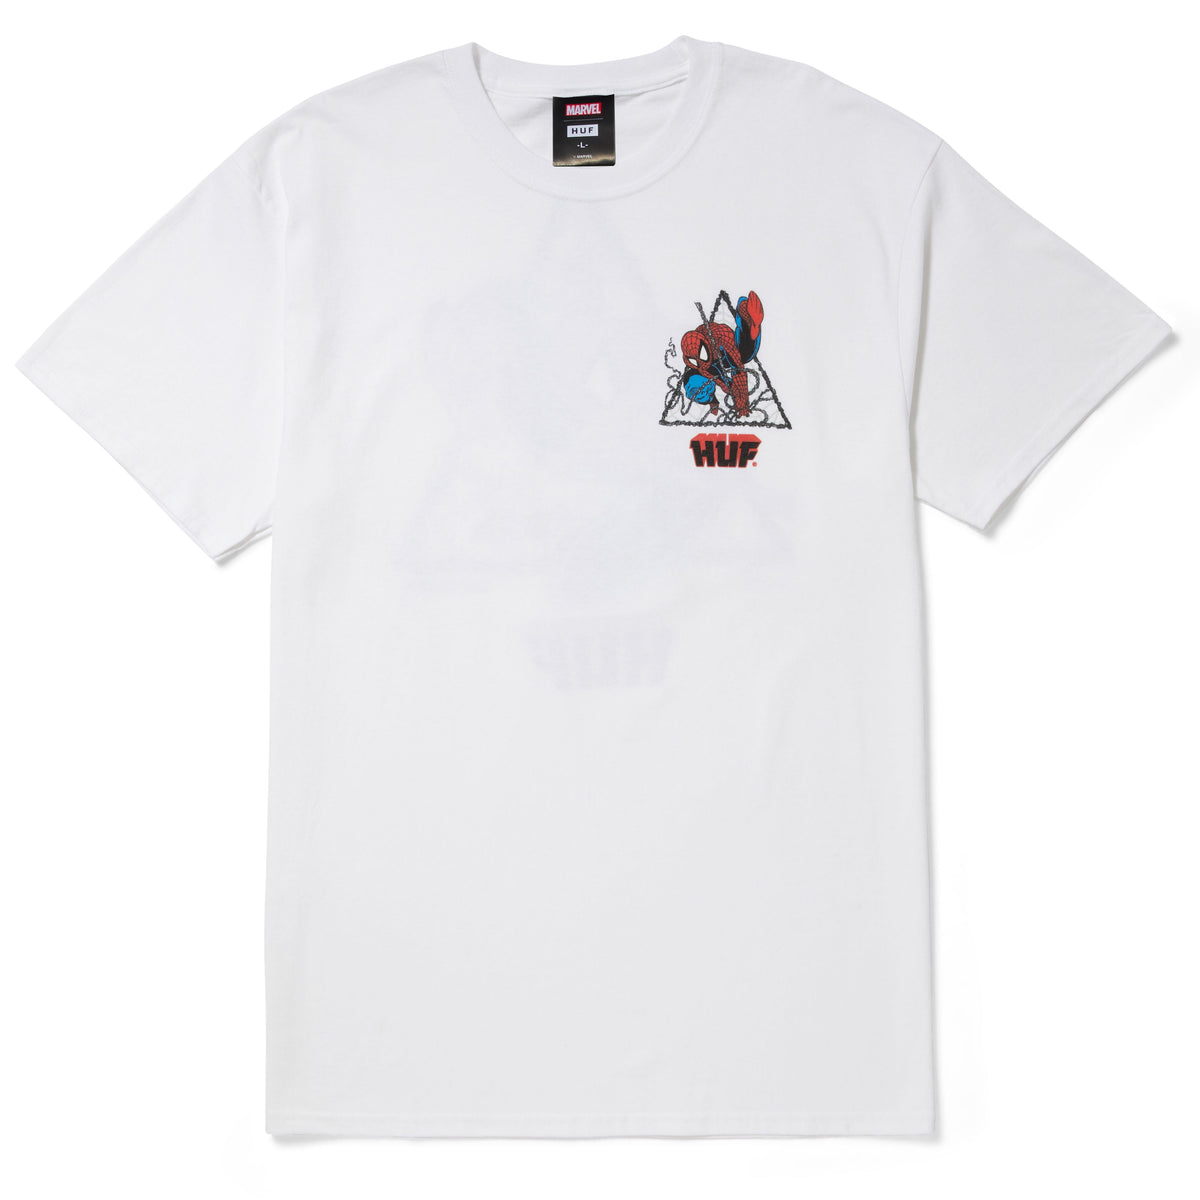 Huf Thwip Triangle Short Sleeve T-Shirt White TS02055 WHT - APLAZE